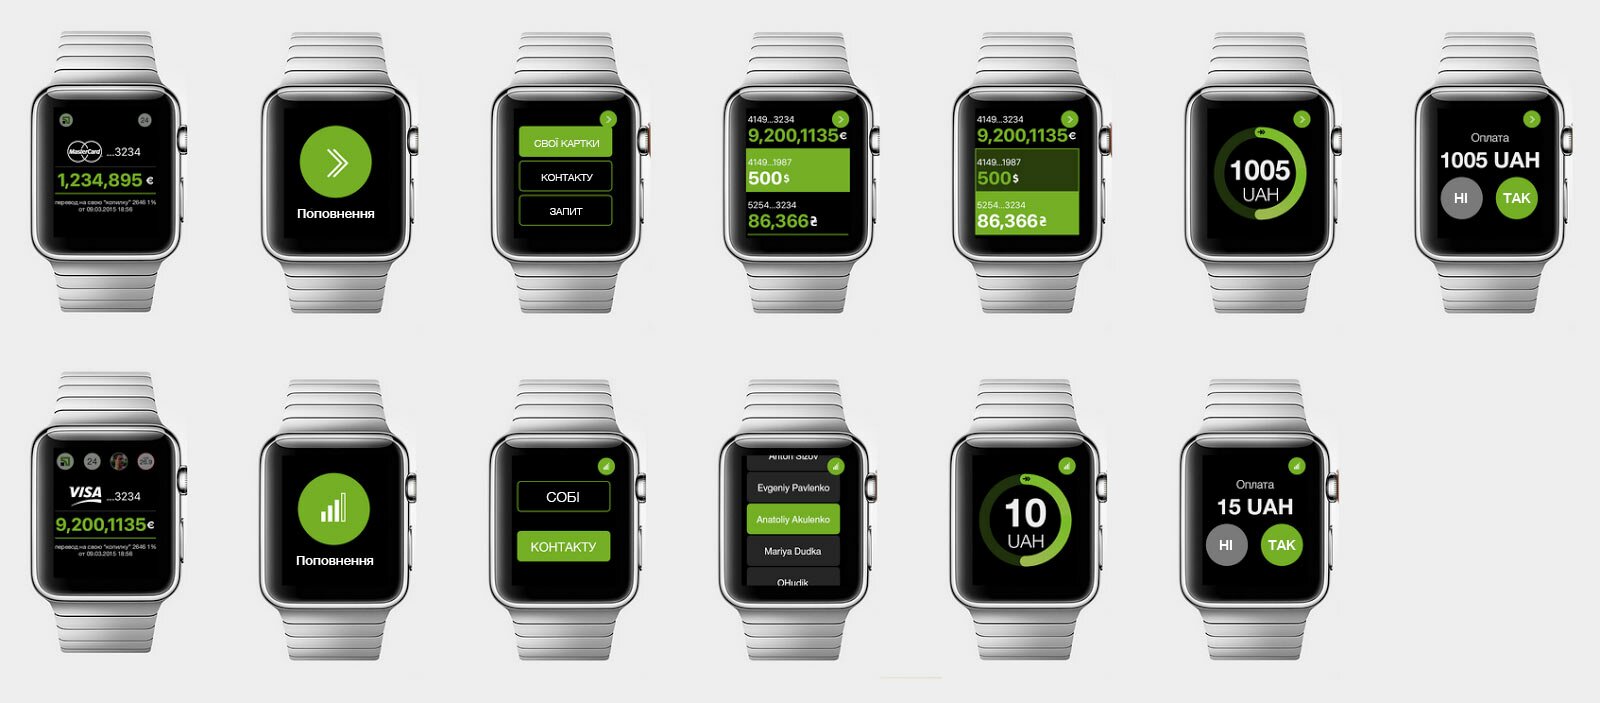 ПриватБaнк розробив додаток Приват24 для Apple Watch